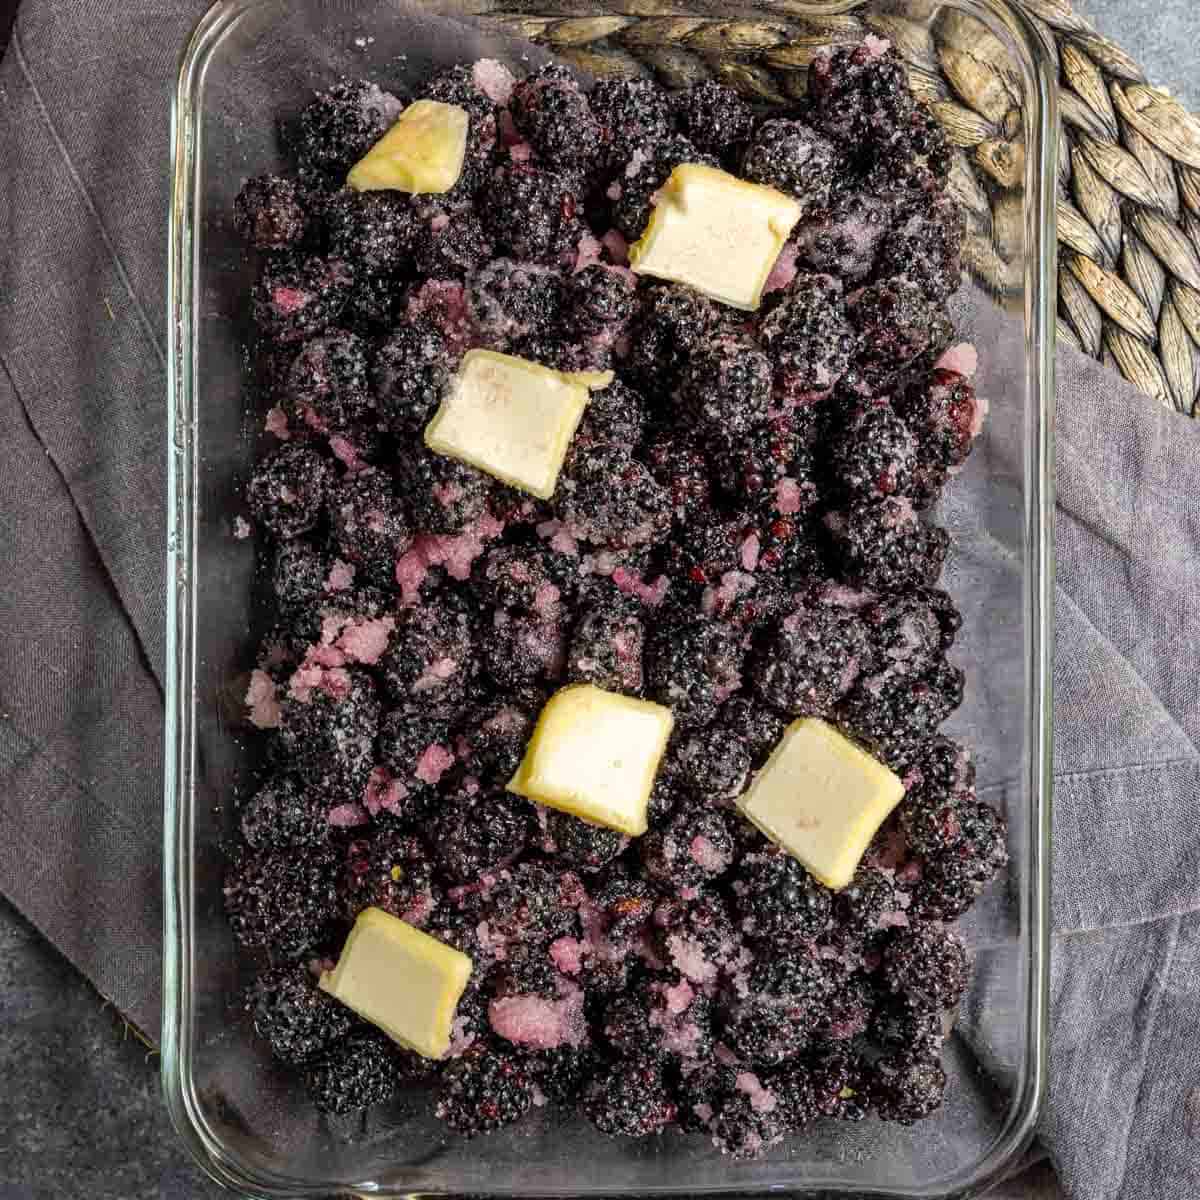 sugared blackberrys in dish to make easy blackberry cobbler